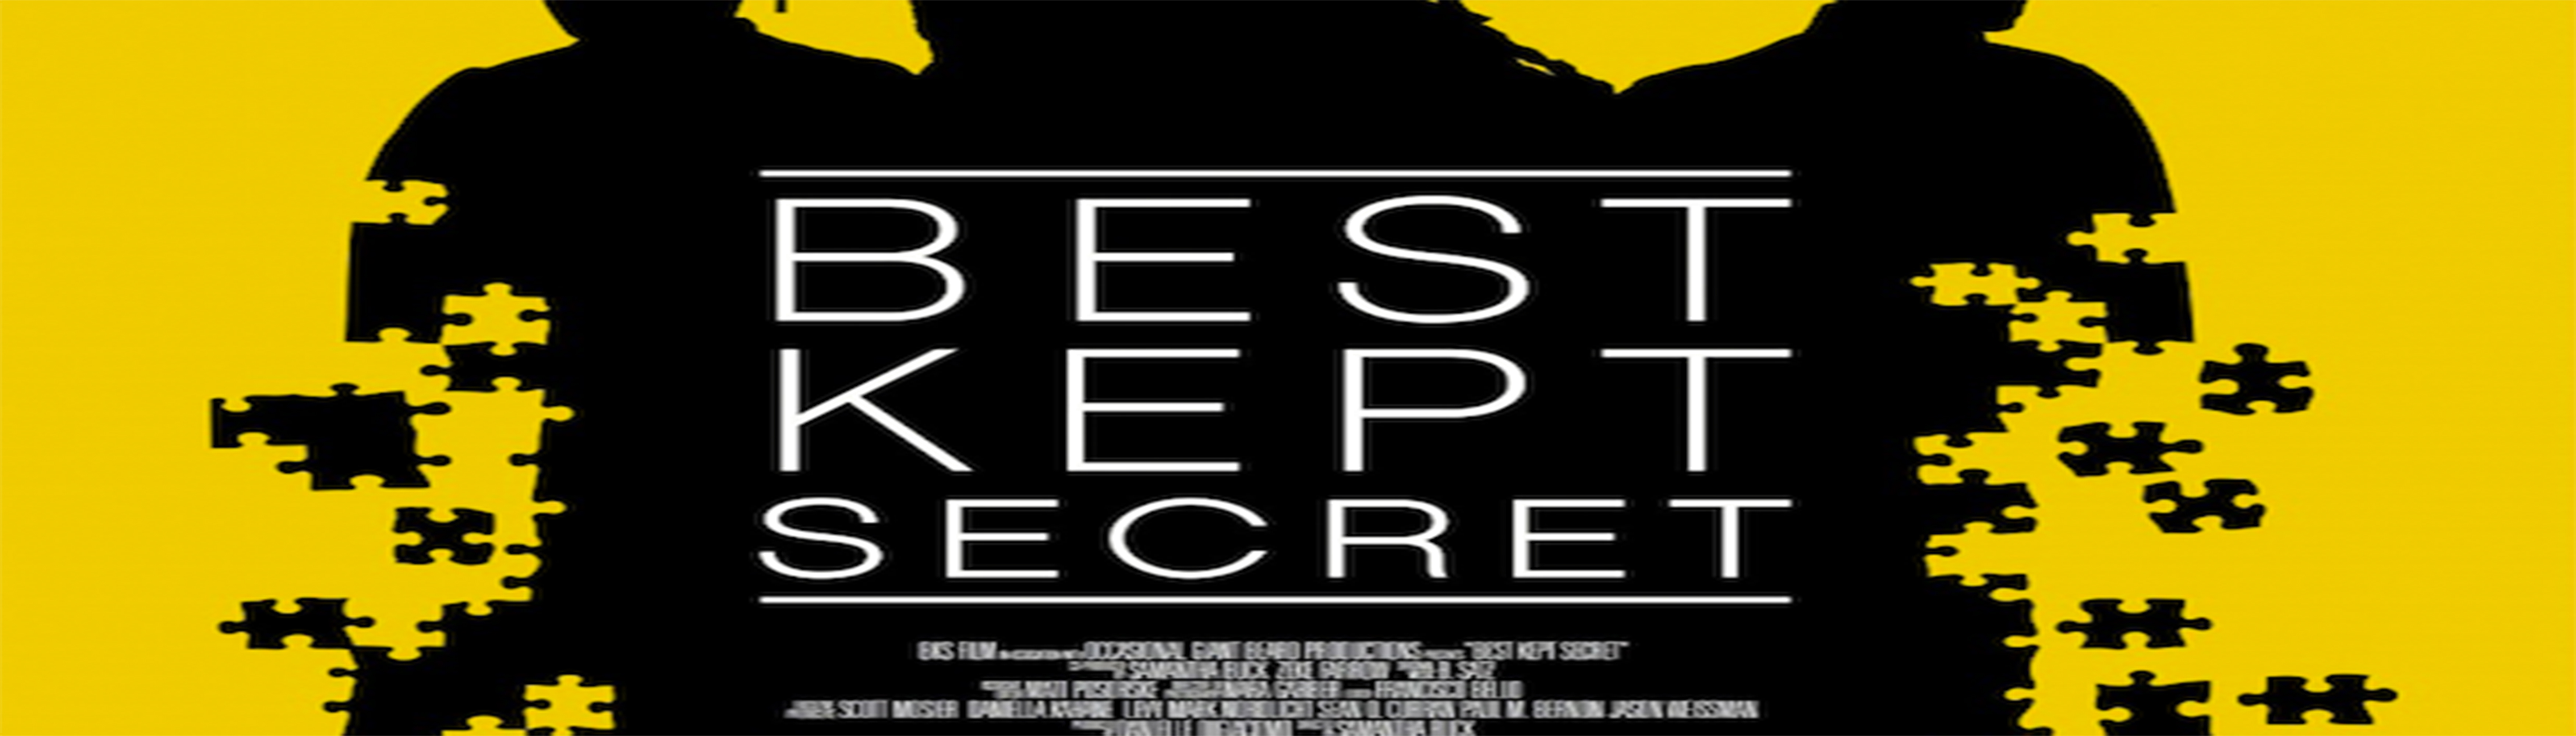 دانلود فیلم مستند Best Kept Secret 2013